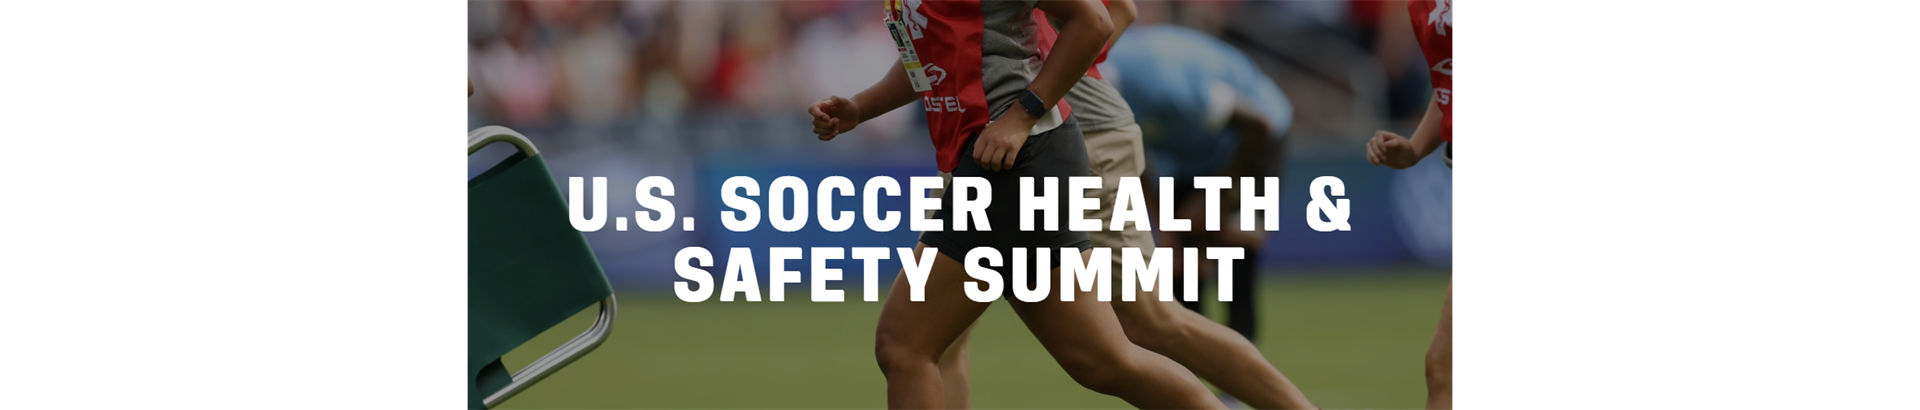 Watch recording of U.S. Soccer Health & Safety Summit 